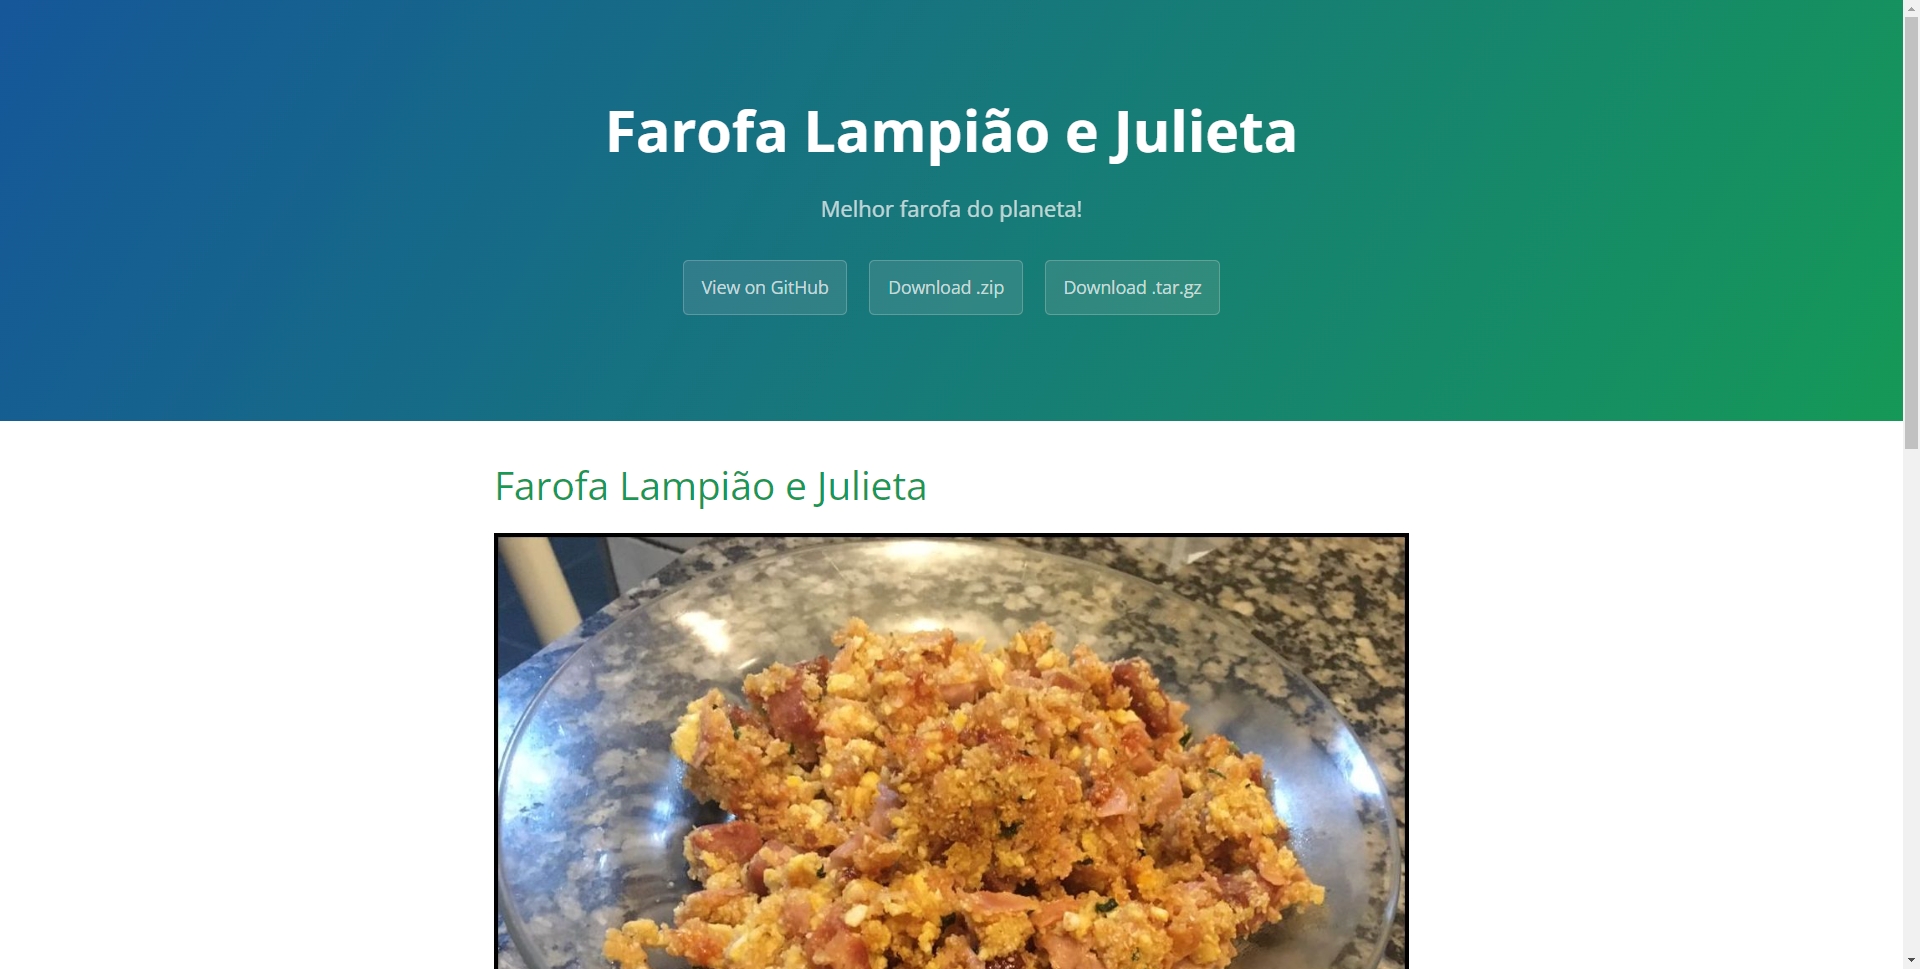 Farofa Lampião e Julieta